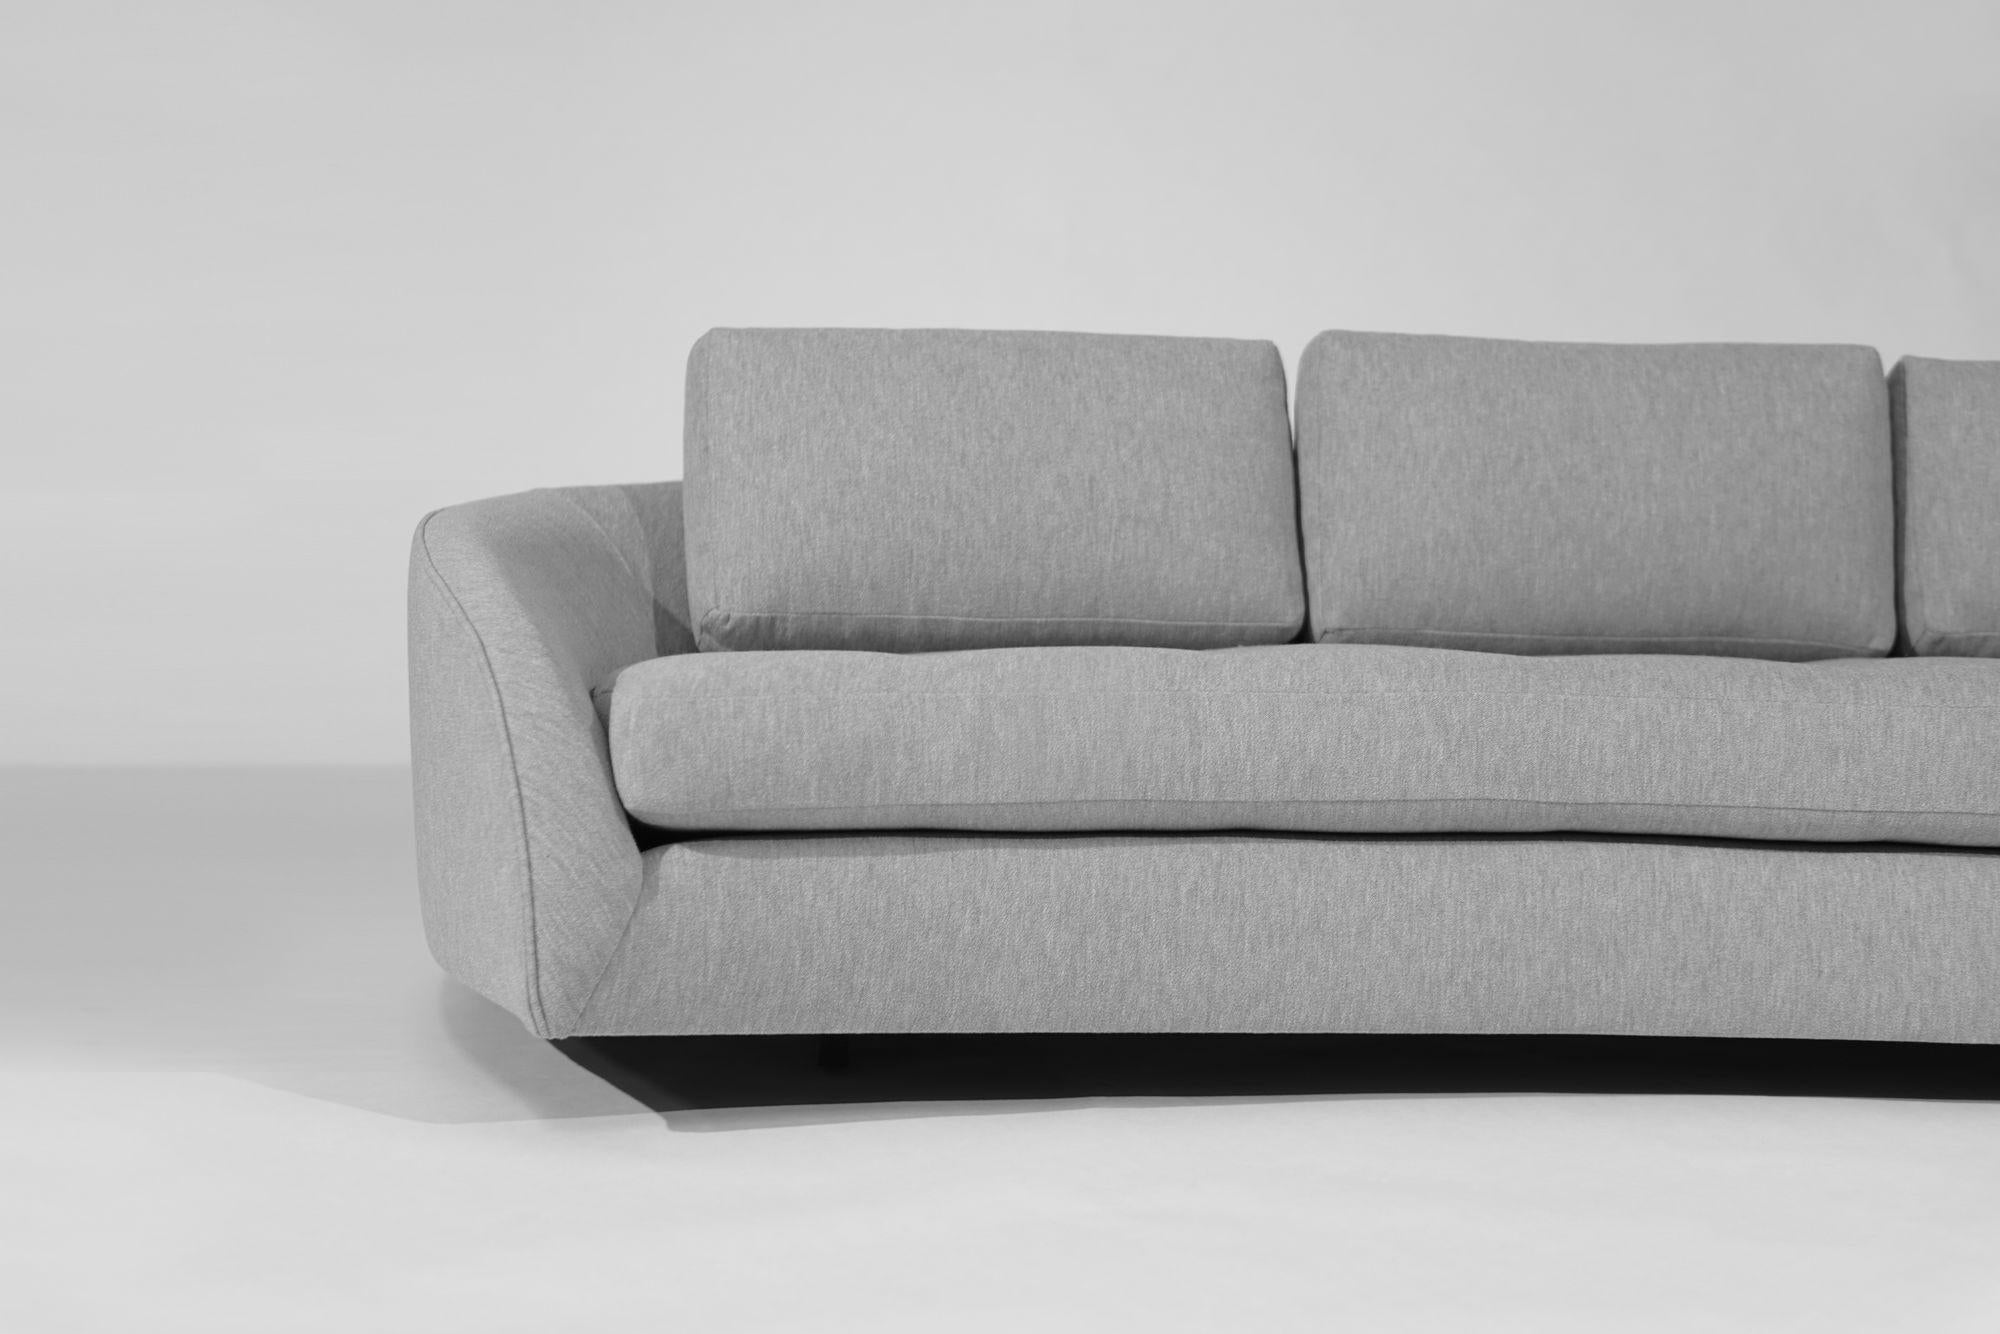 Bouclé Adrian Pearsall for Craft Associates Cloud Sofa, C. 1950s For Sale